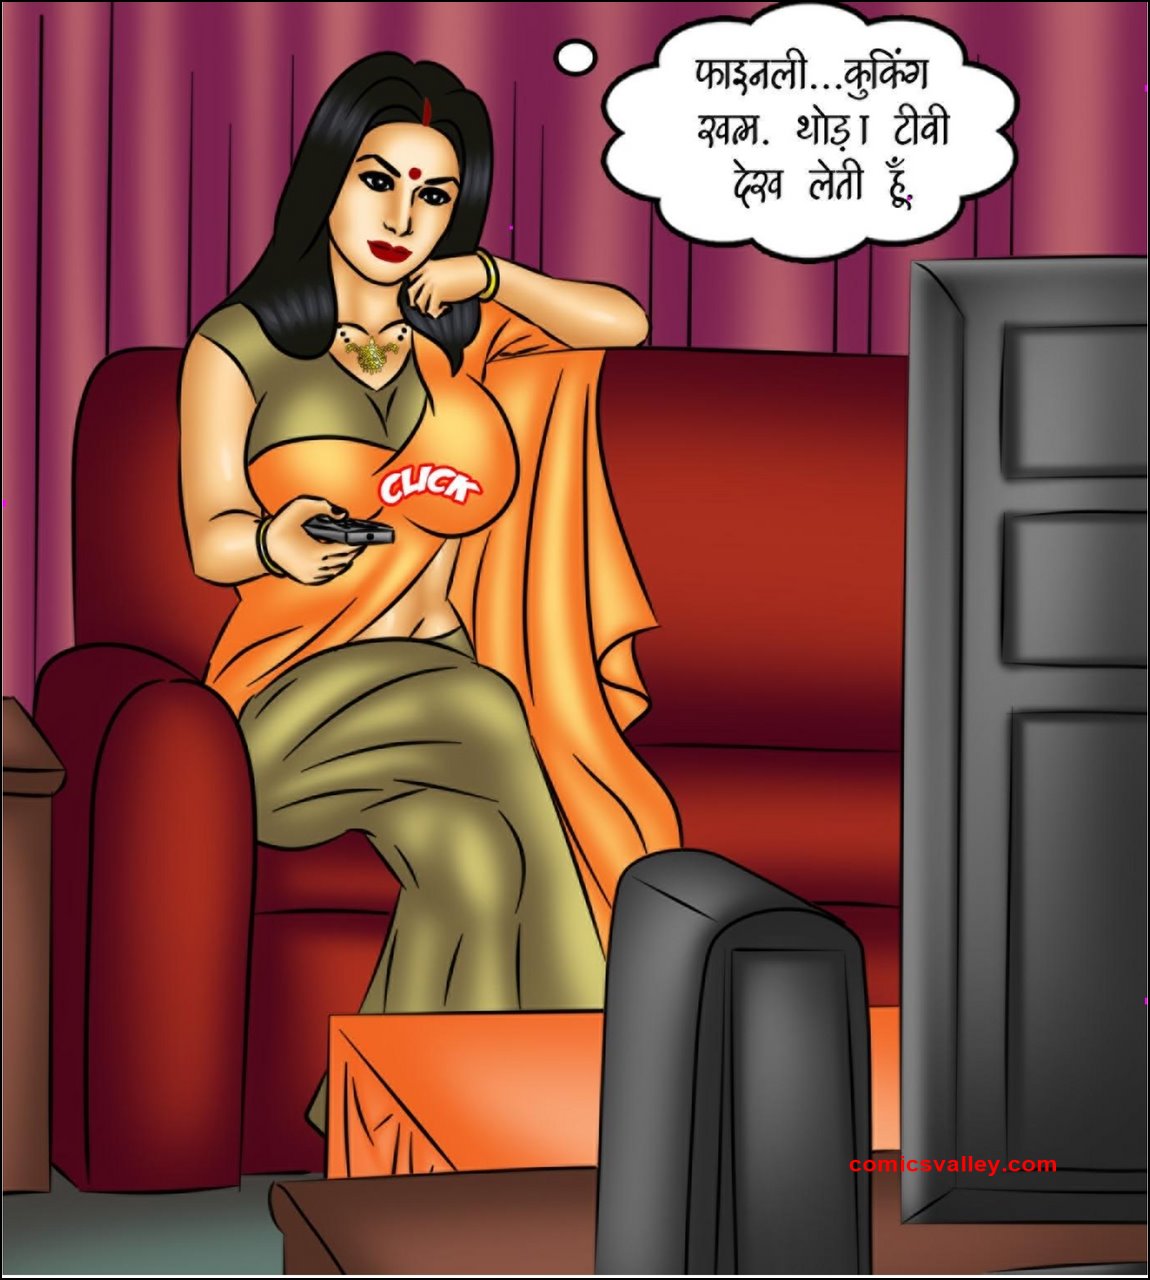 Savita bhabhi comics in marathi